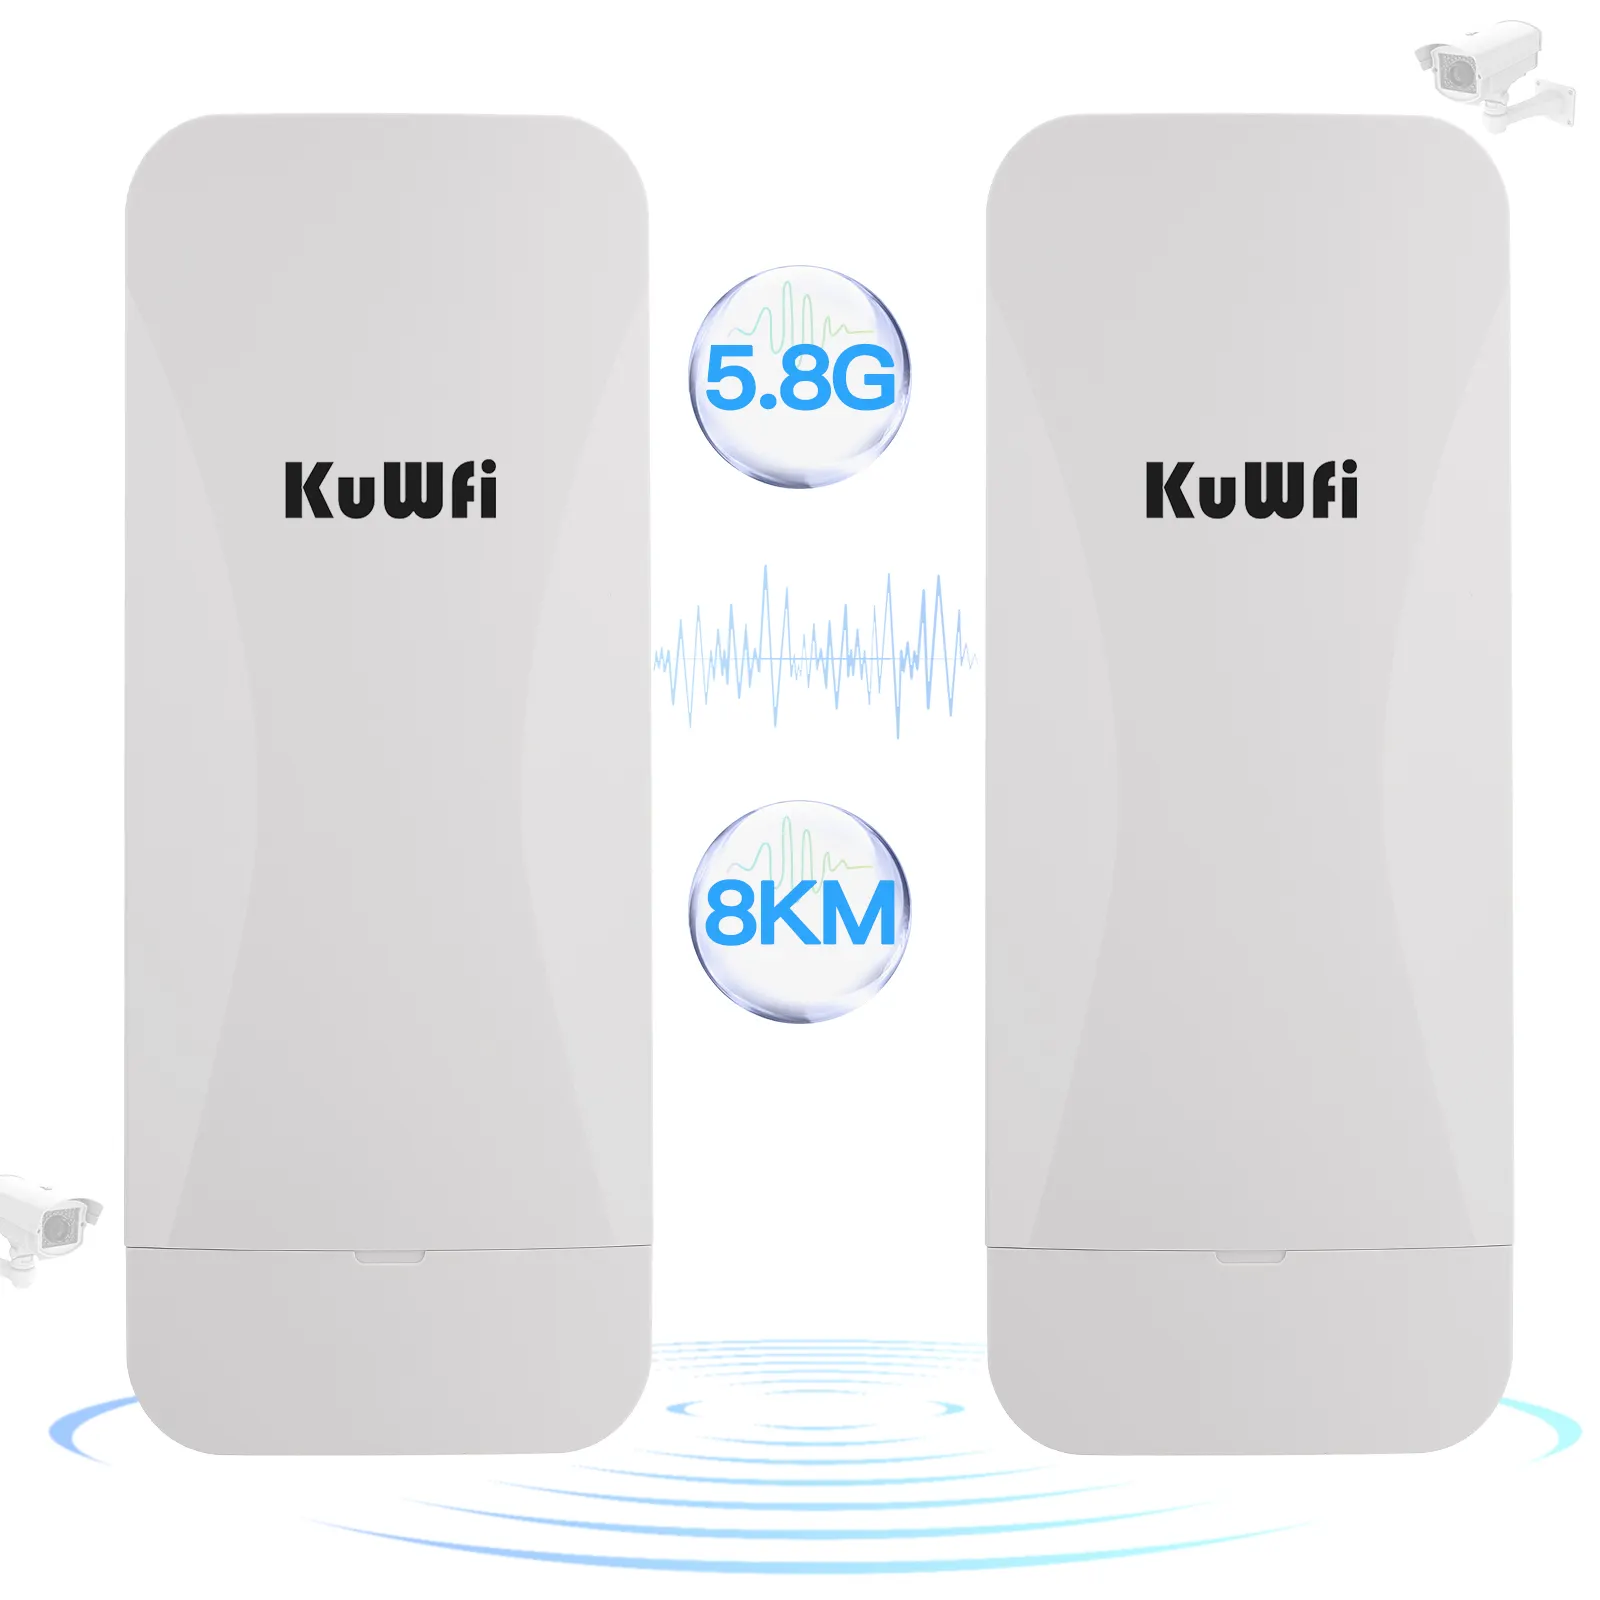 18dBi directional antenna KuWFi wireless bridge 900mbps 8km long distance outdoor cpe point to point wifi bridge for cctv